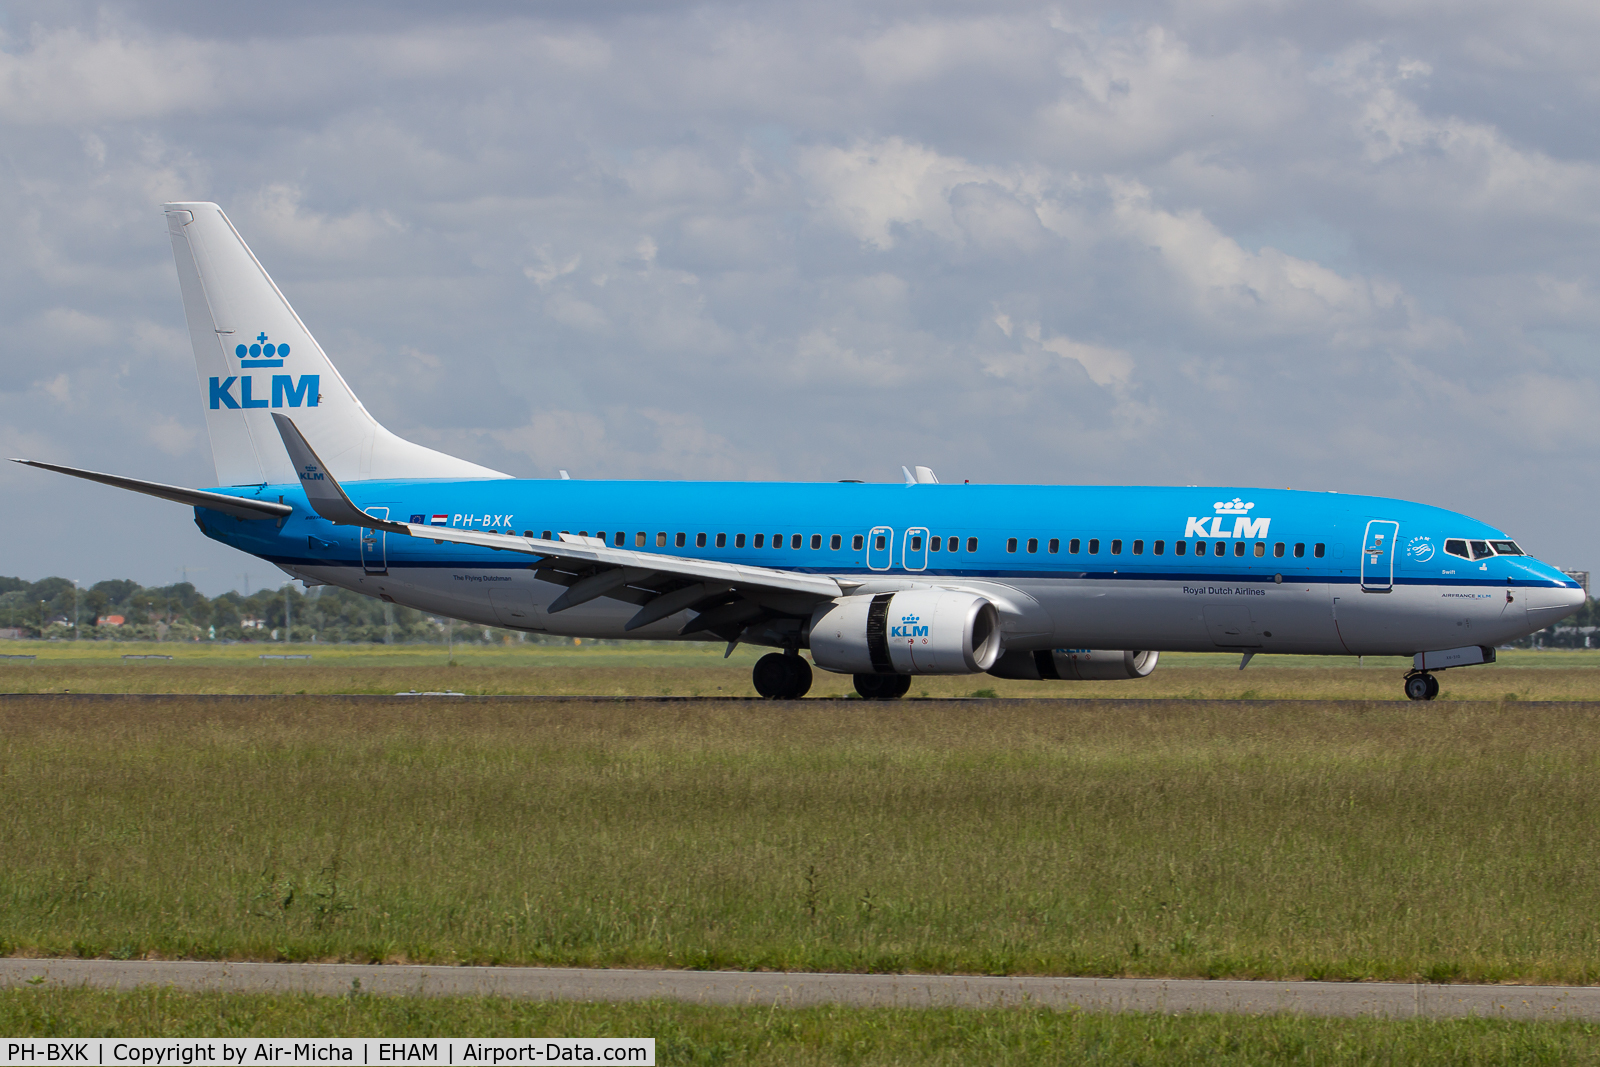 PH-BXK, 2000 Boeing 737-8K2 C/N 29598, KLM Royal Dutch Airlines